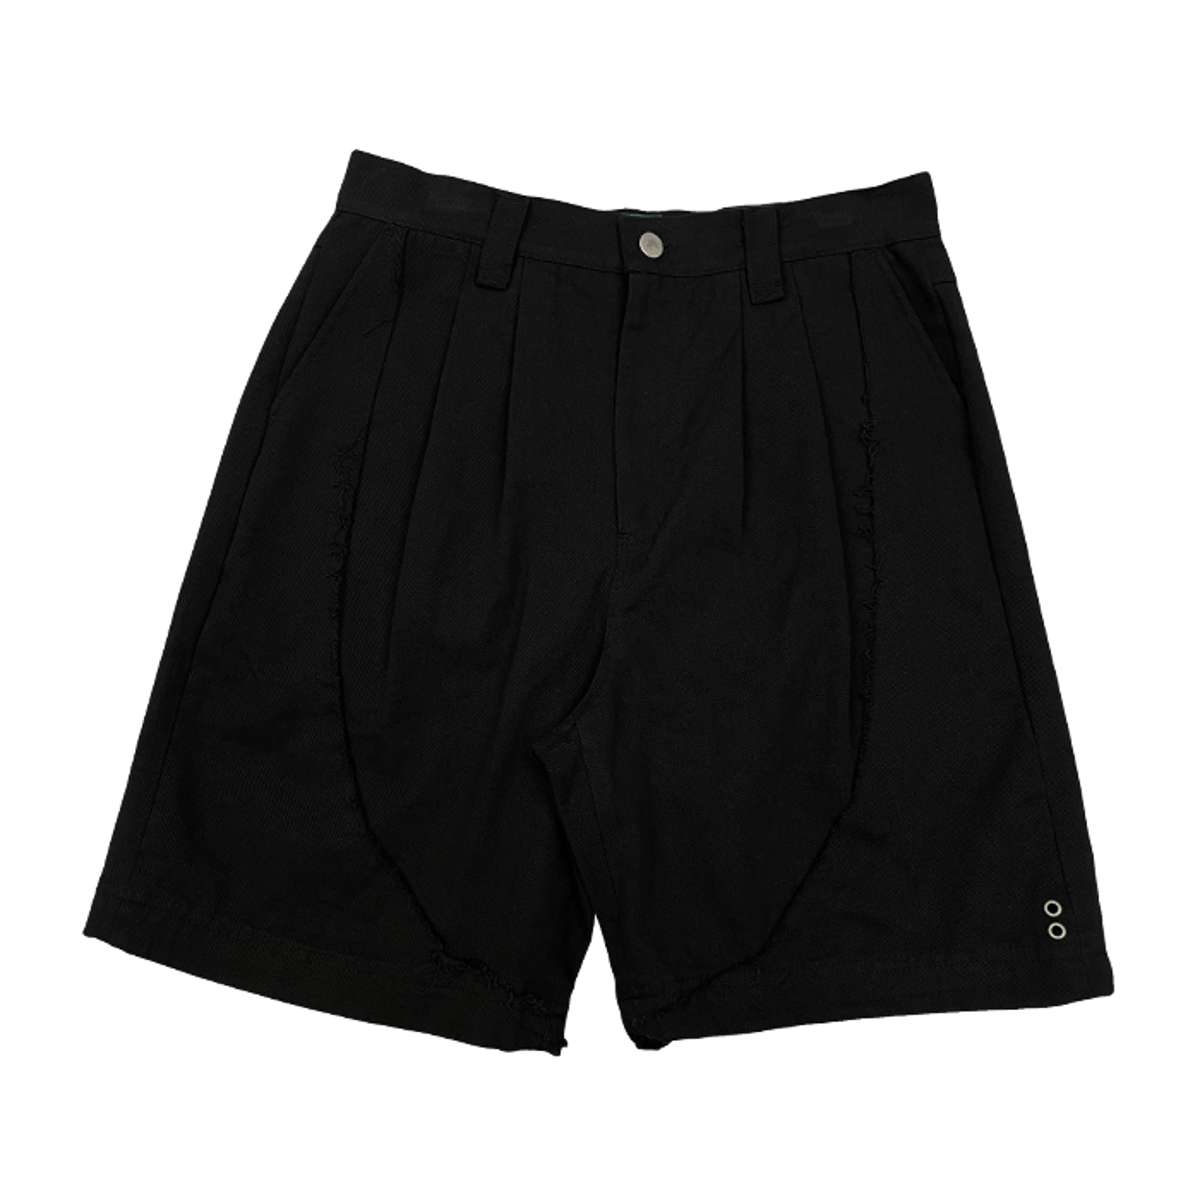 TCM half chino short pants (black)